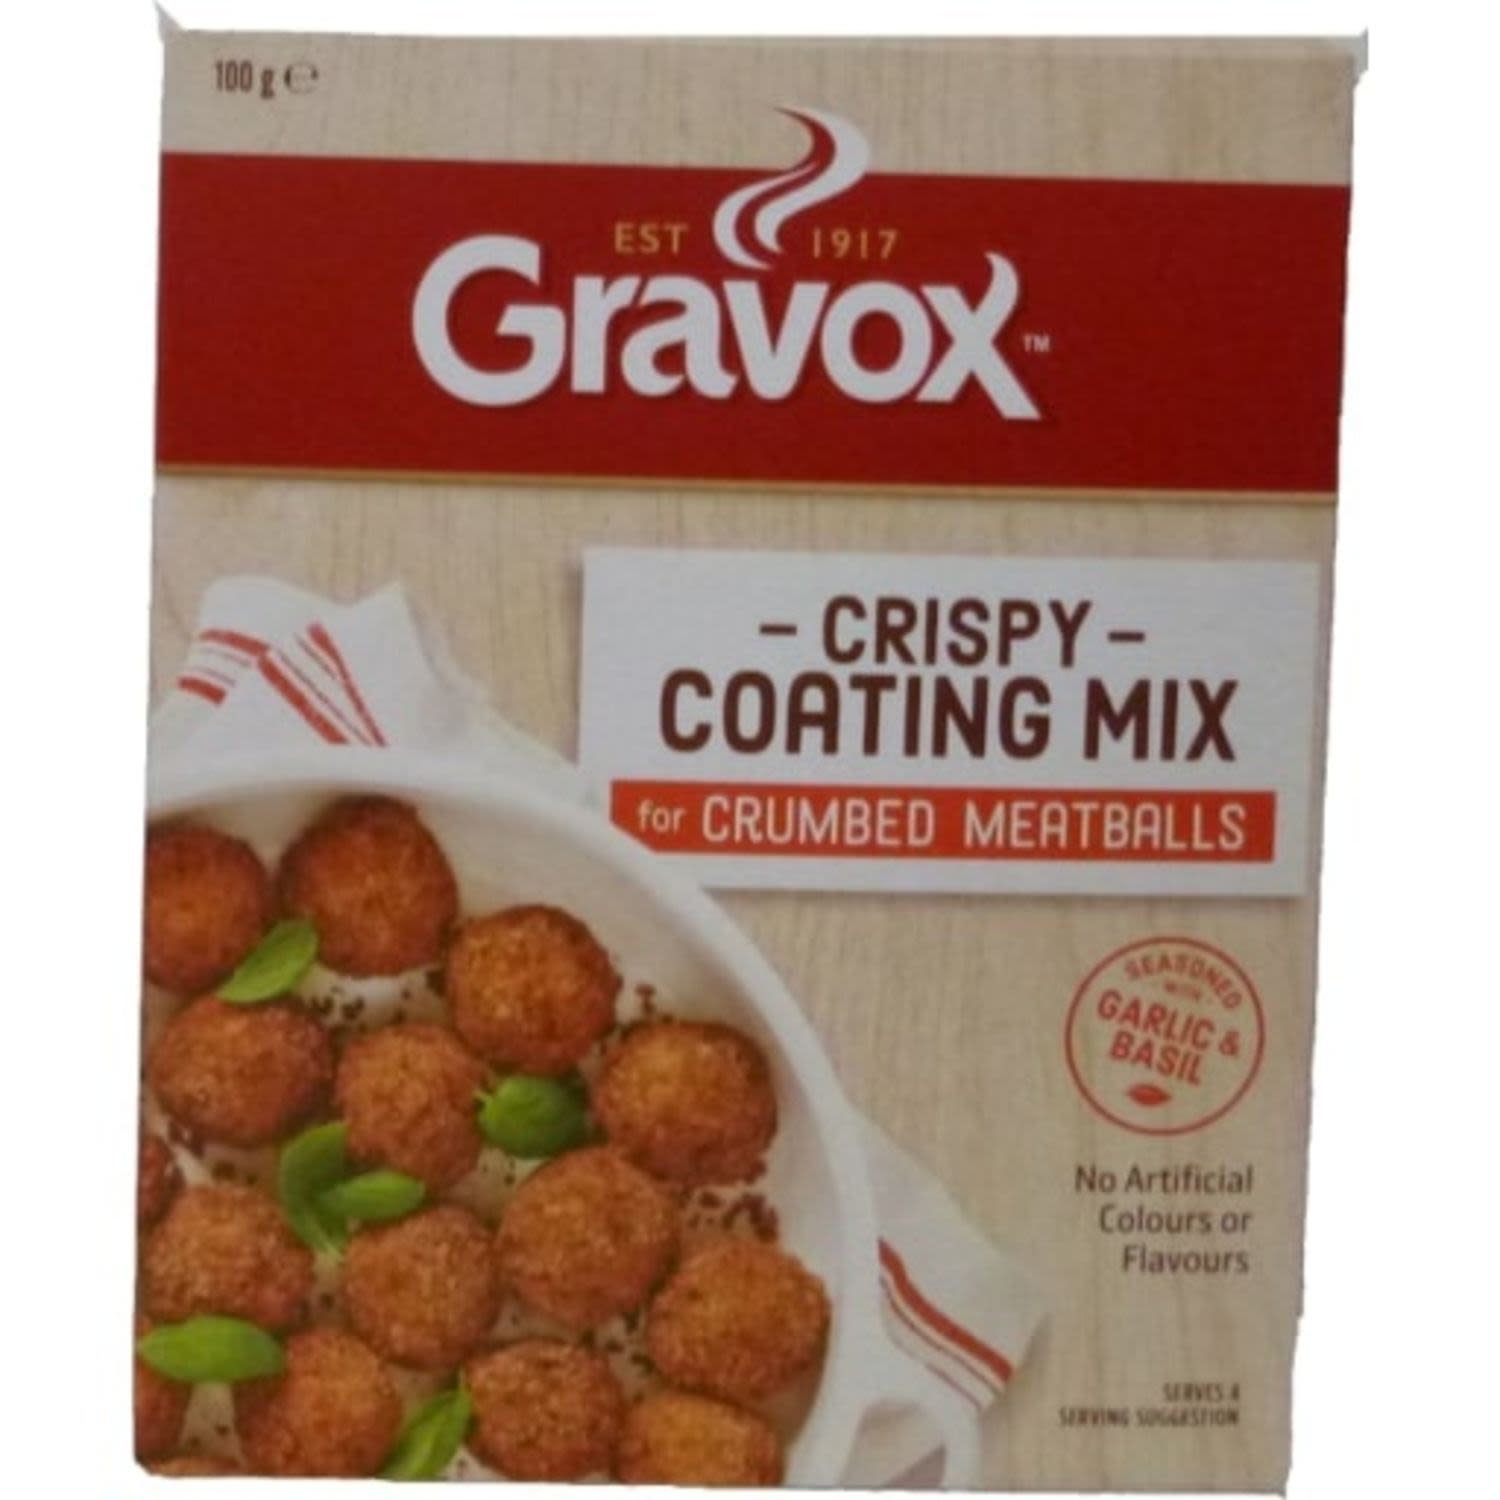 Gravox Crispy Coating Mix for Crumbed Meatballs, 100 Gram